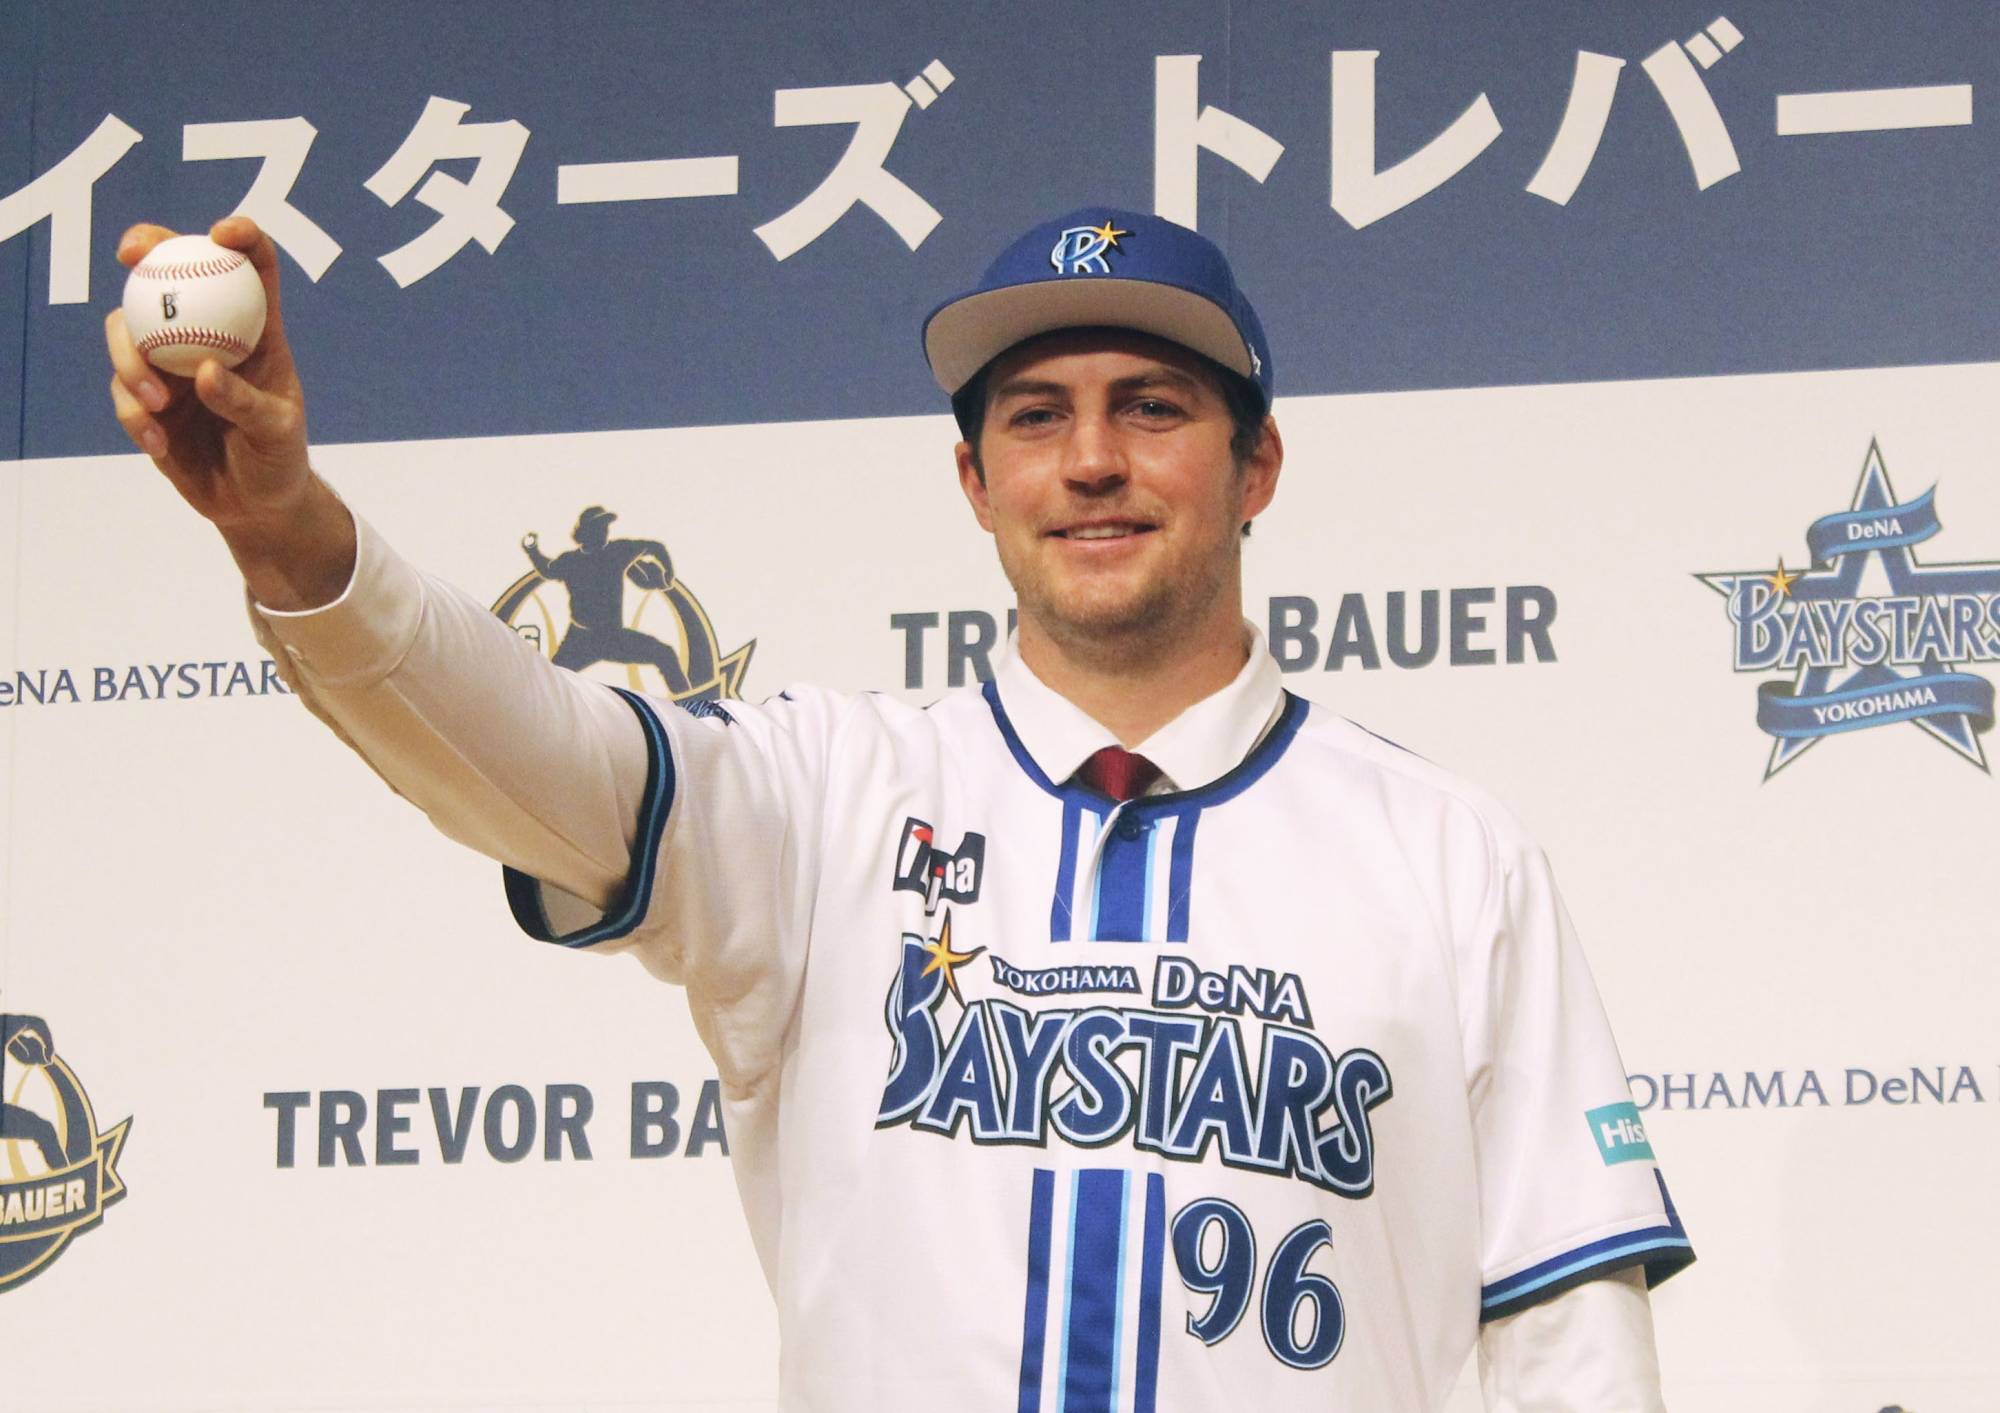 Trevor Bauer arrives in Yokohama with goal of winning championship